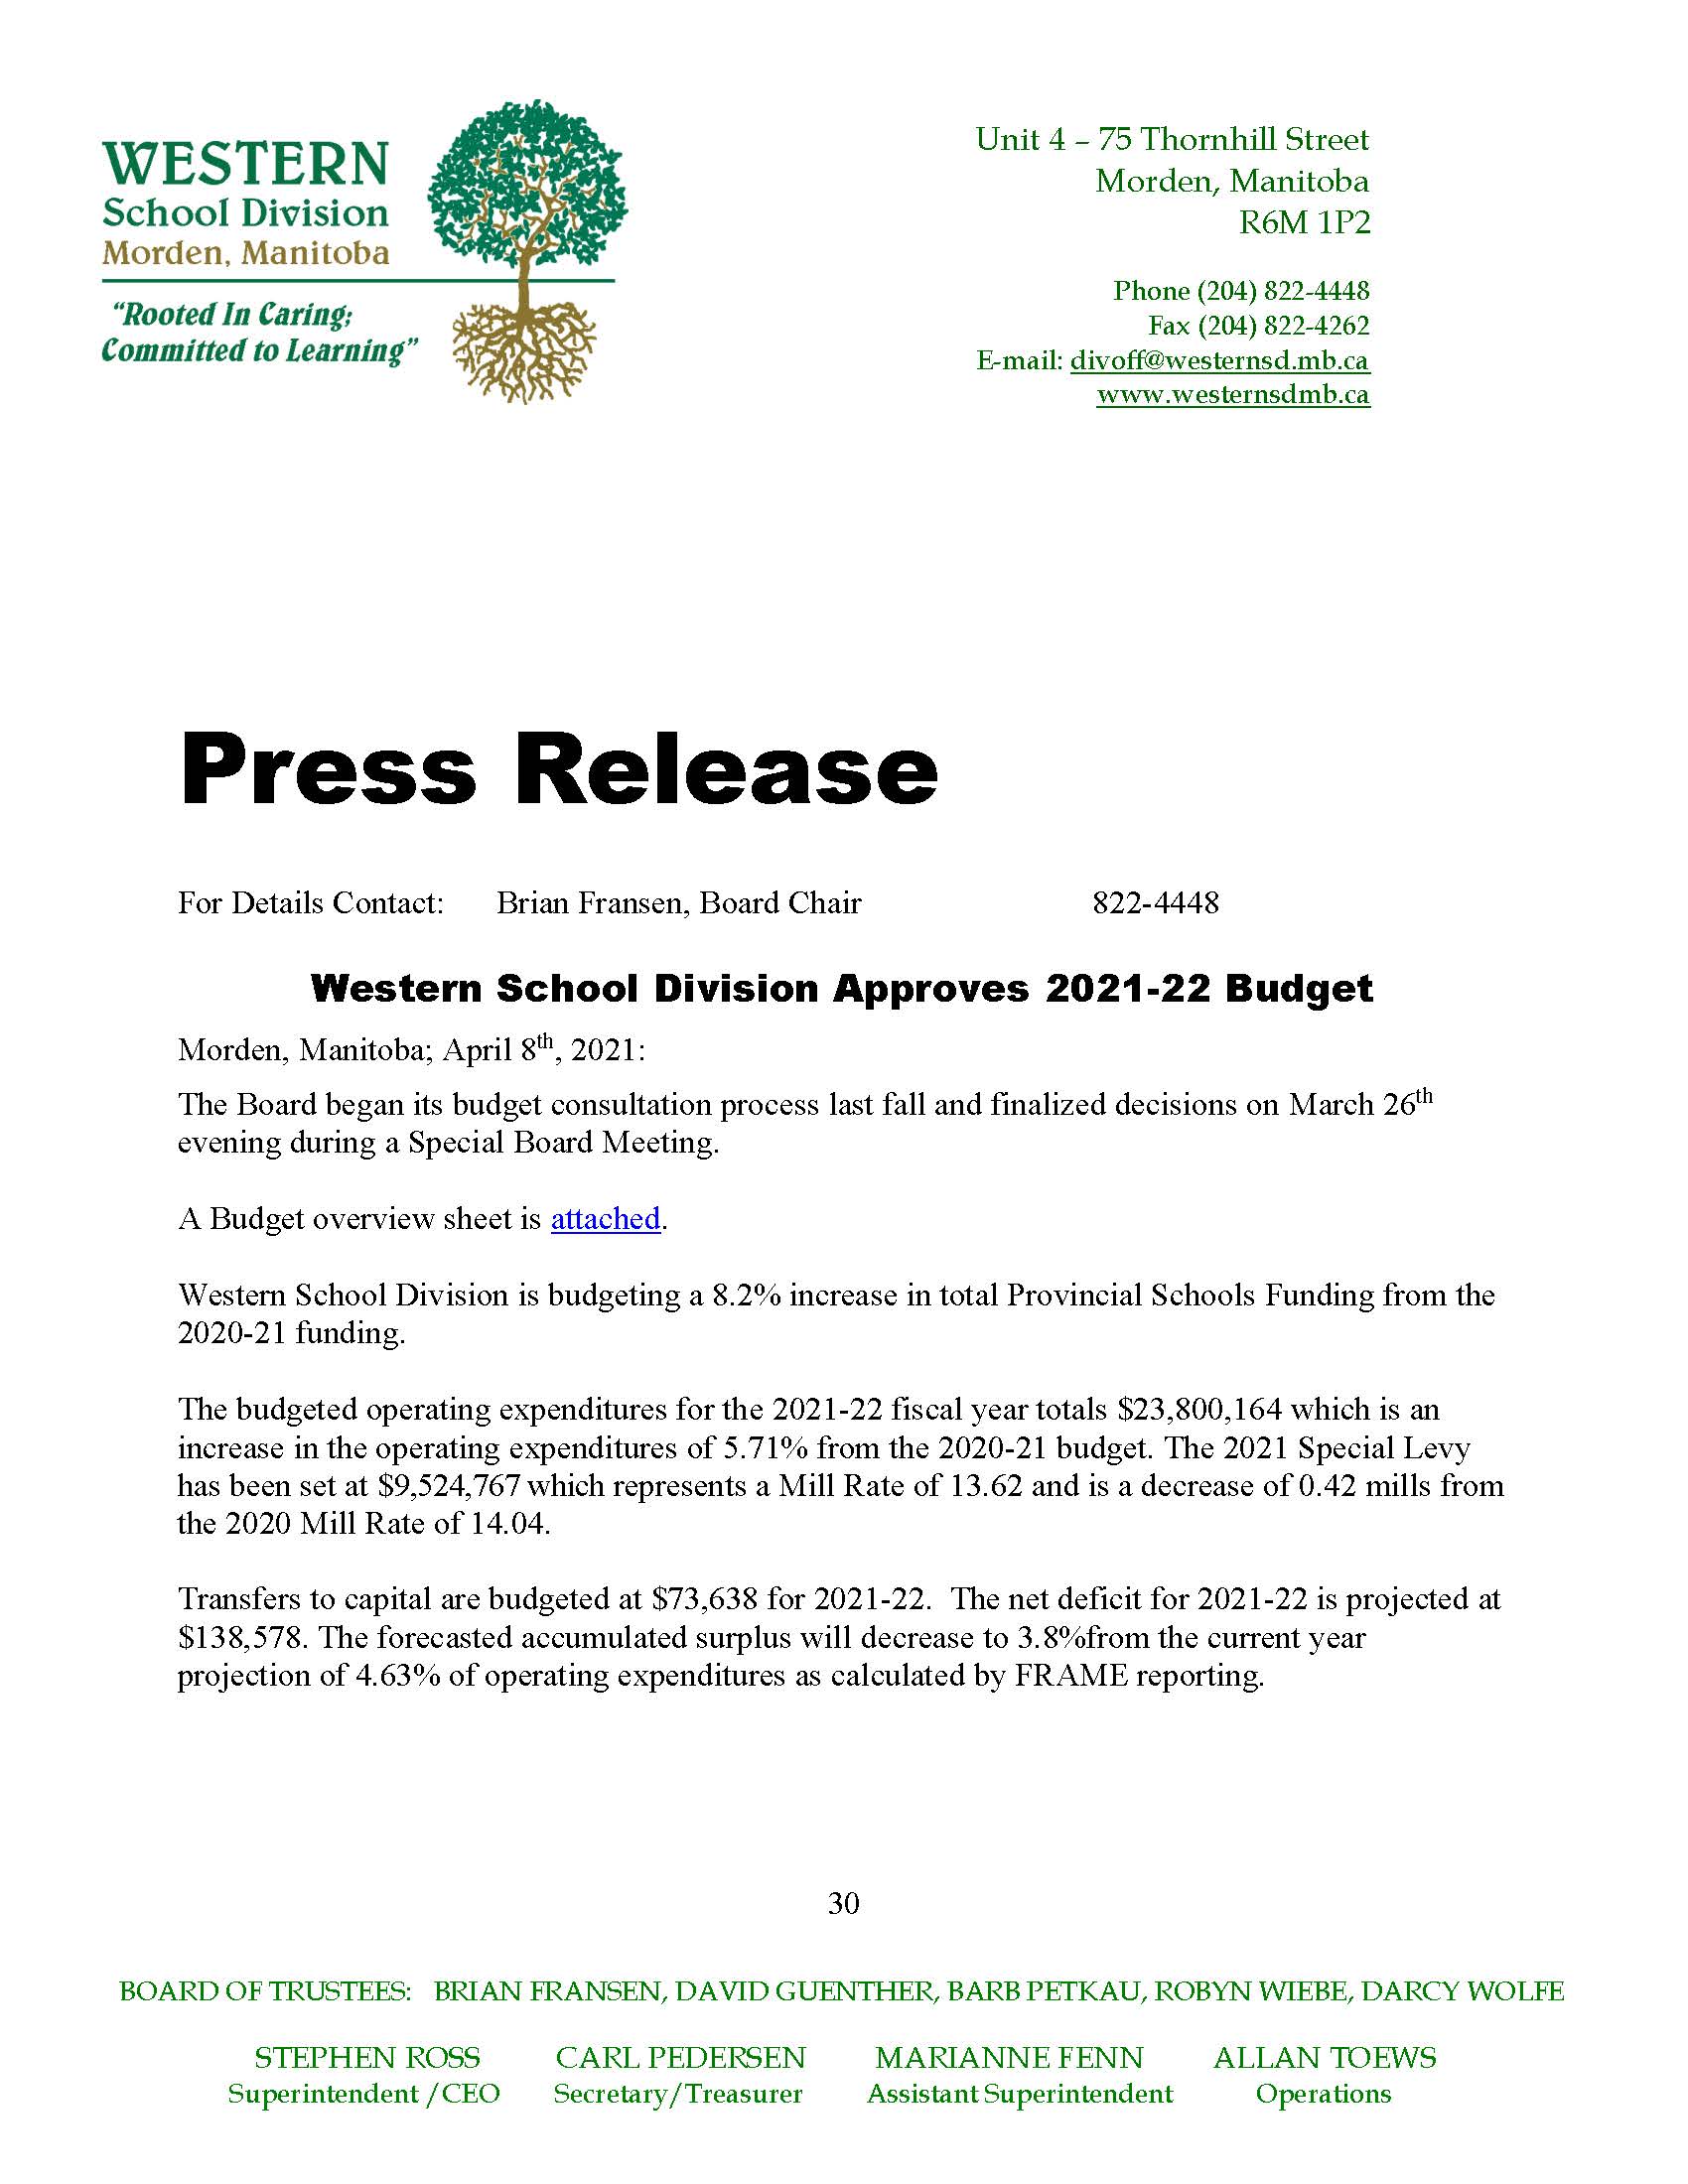 WSD 2021-22 Budget Press Release.jpg